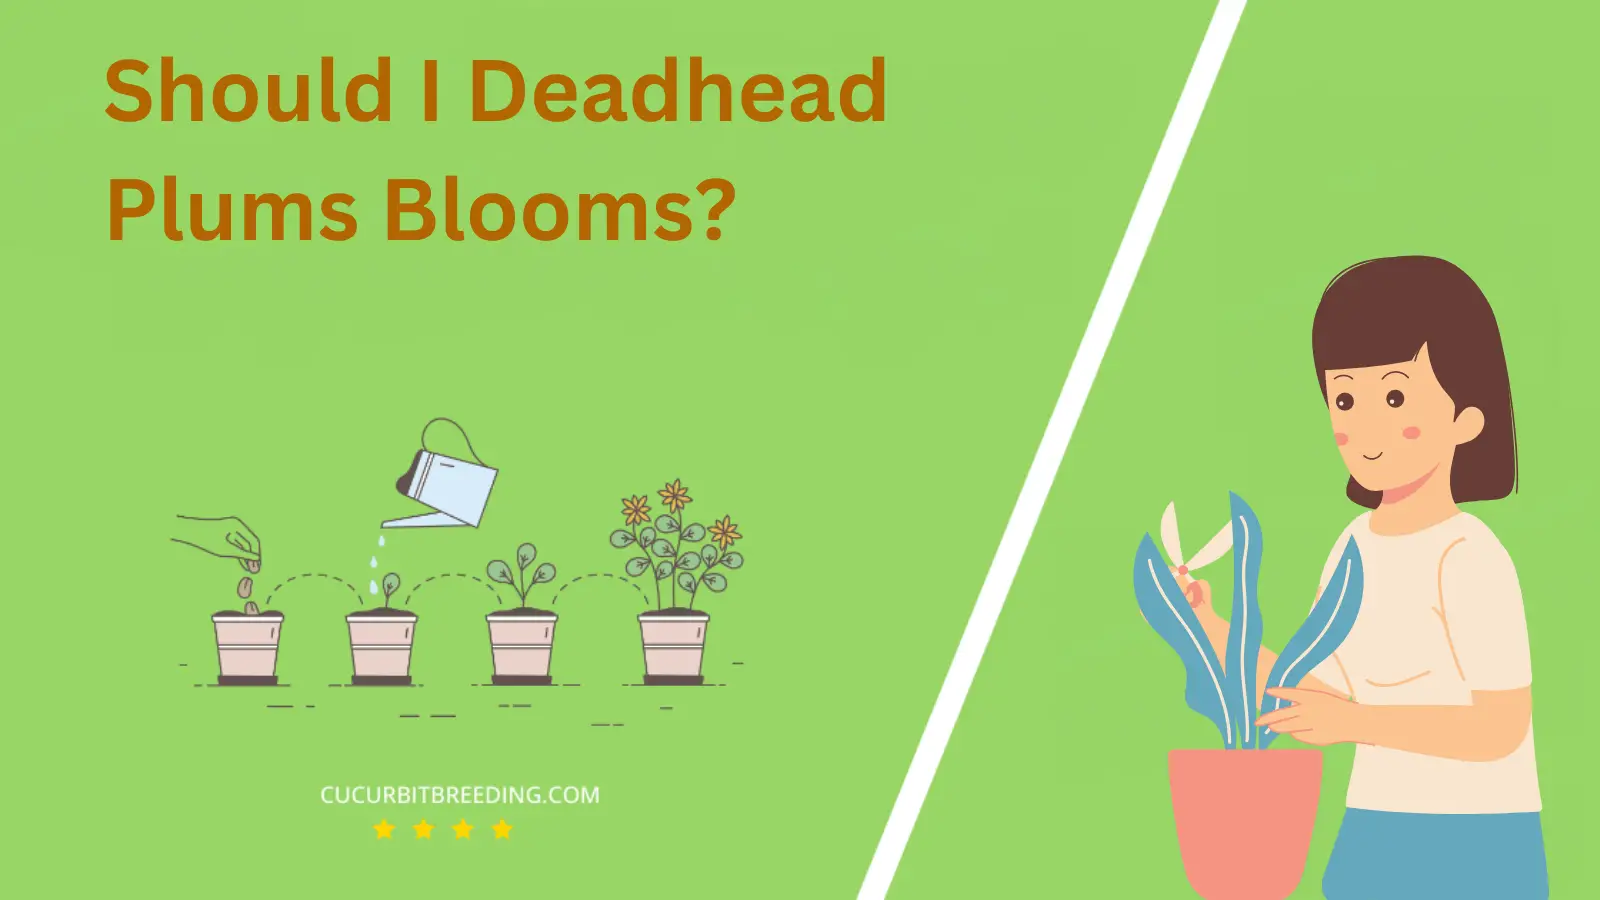 Should I Deadhead Plums Blooms?